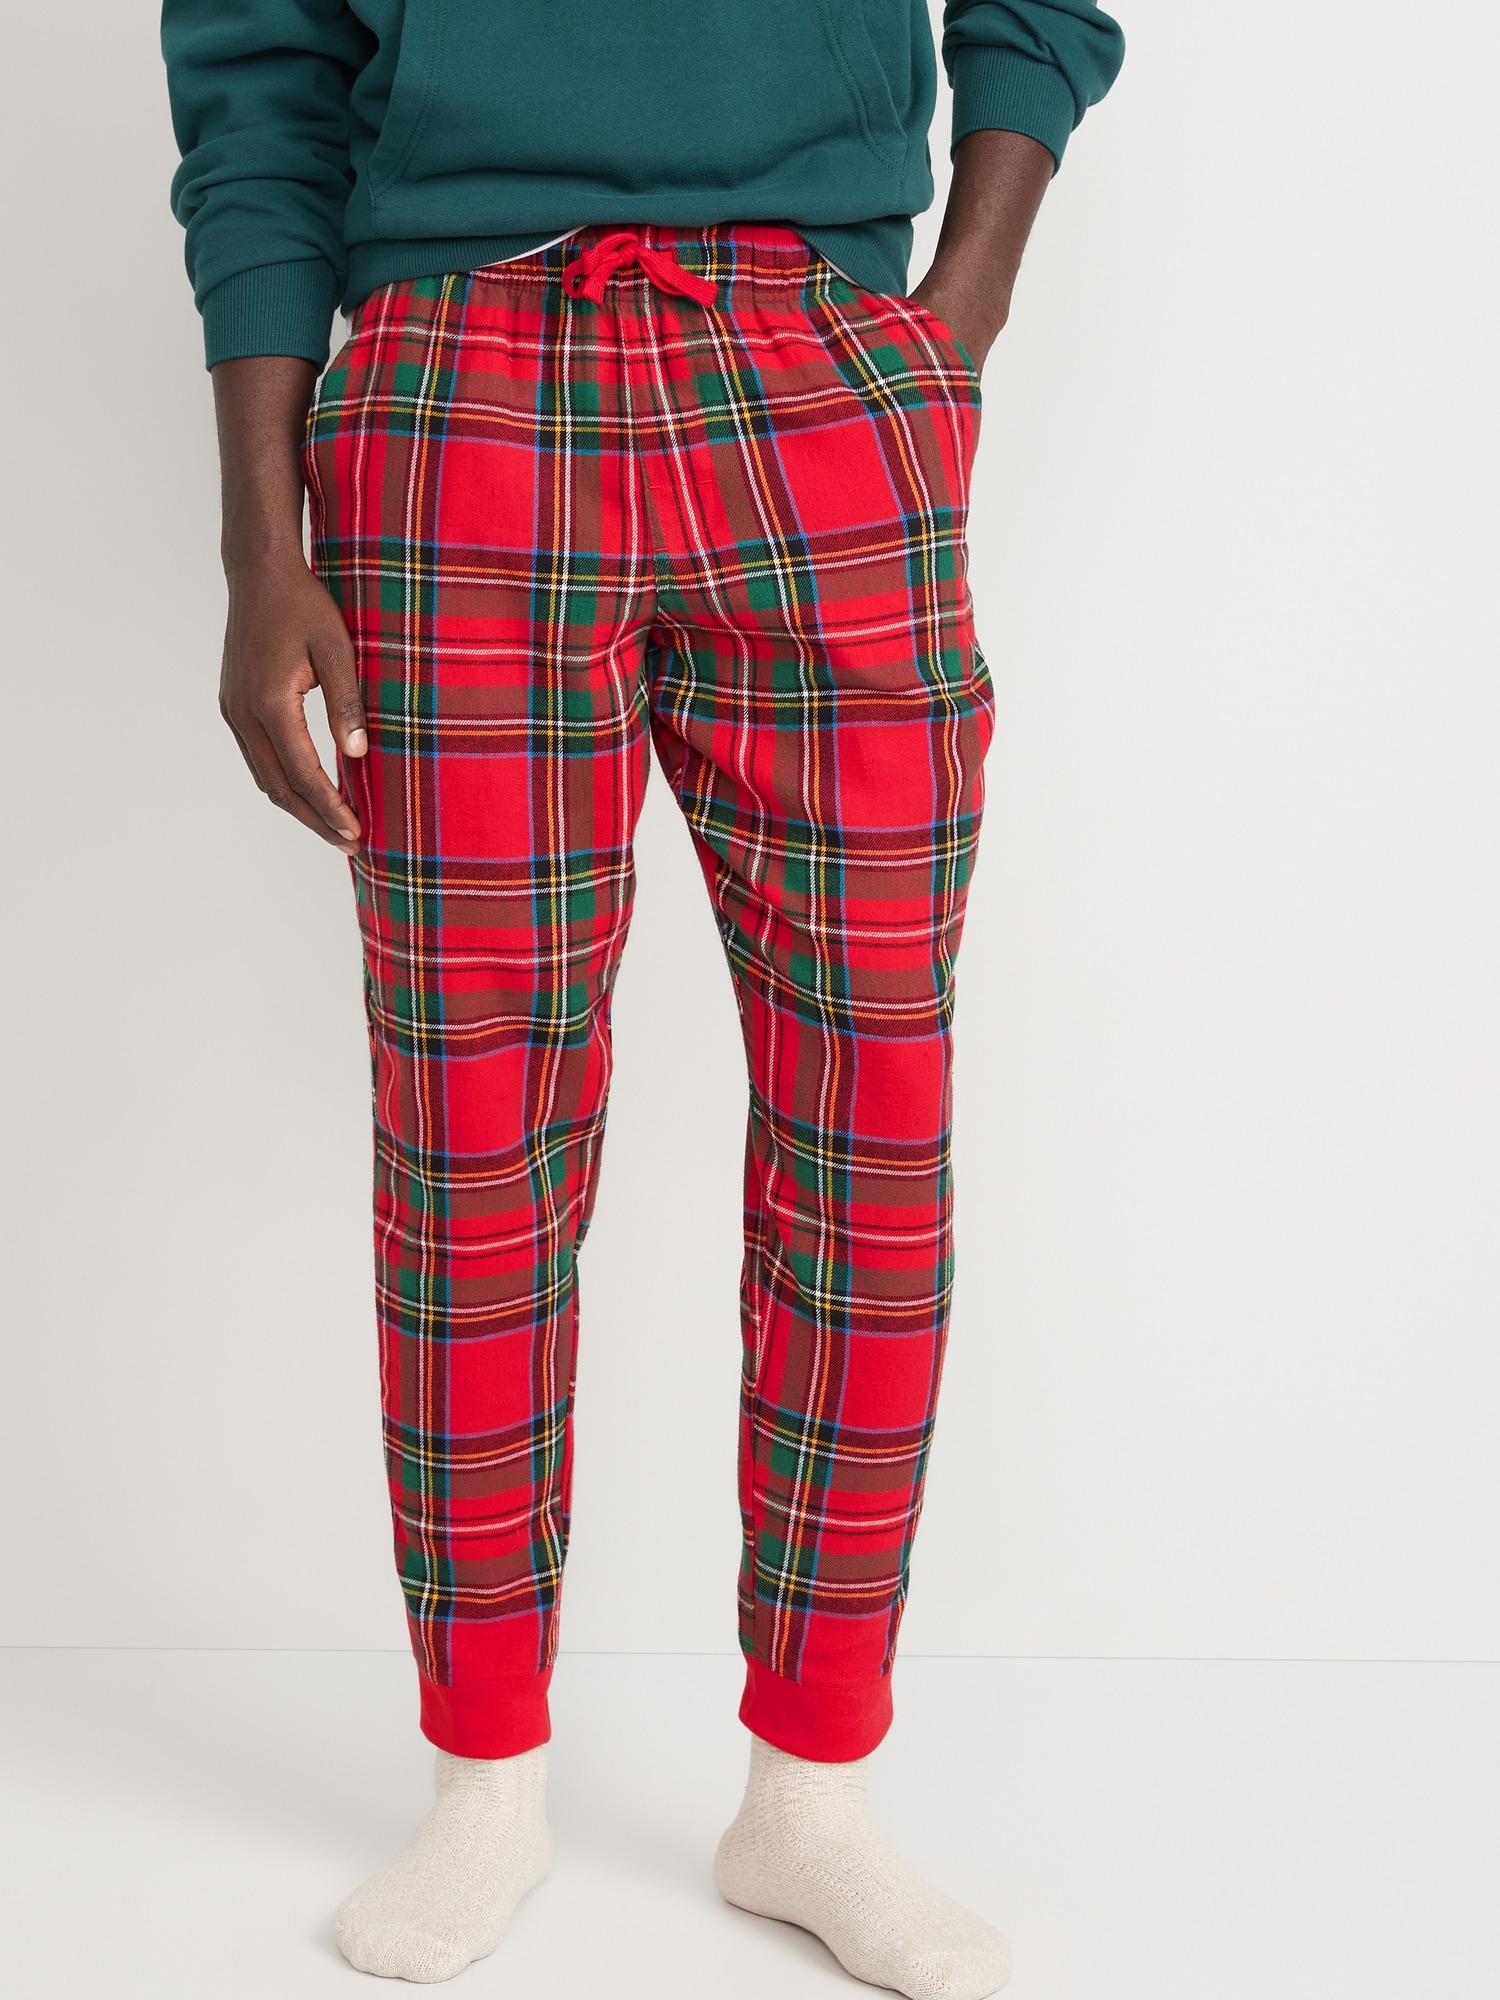 Old Navy red Plaid Pajama Pants size 8 - beyond exchange